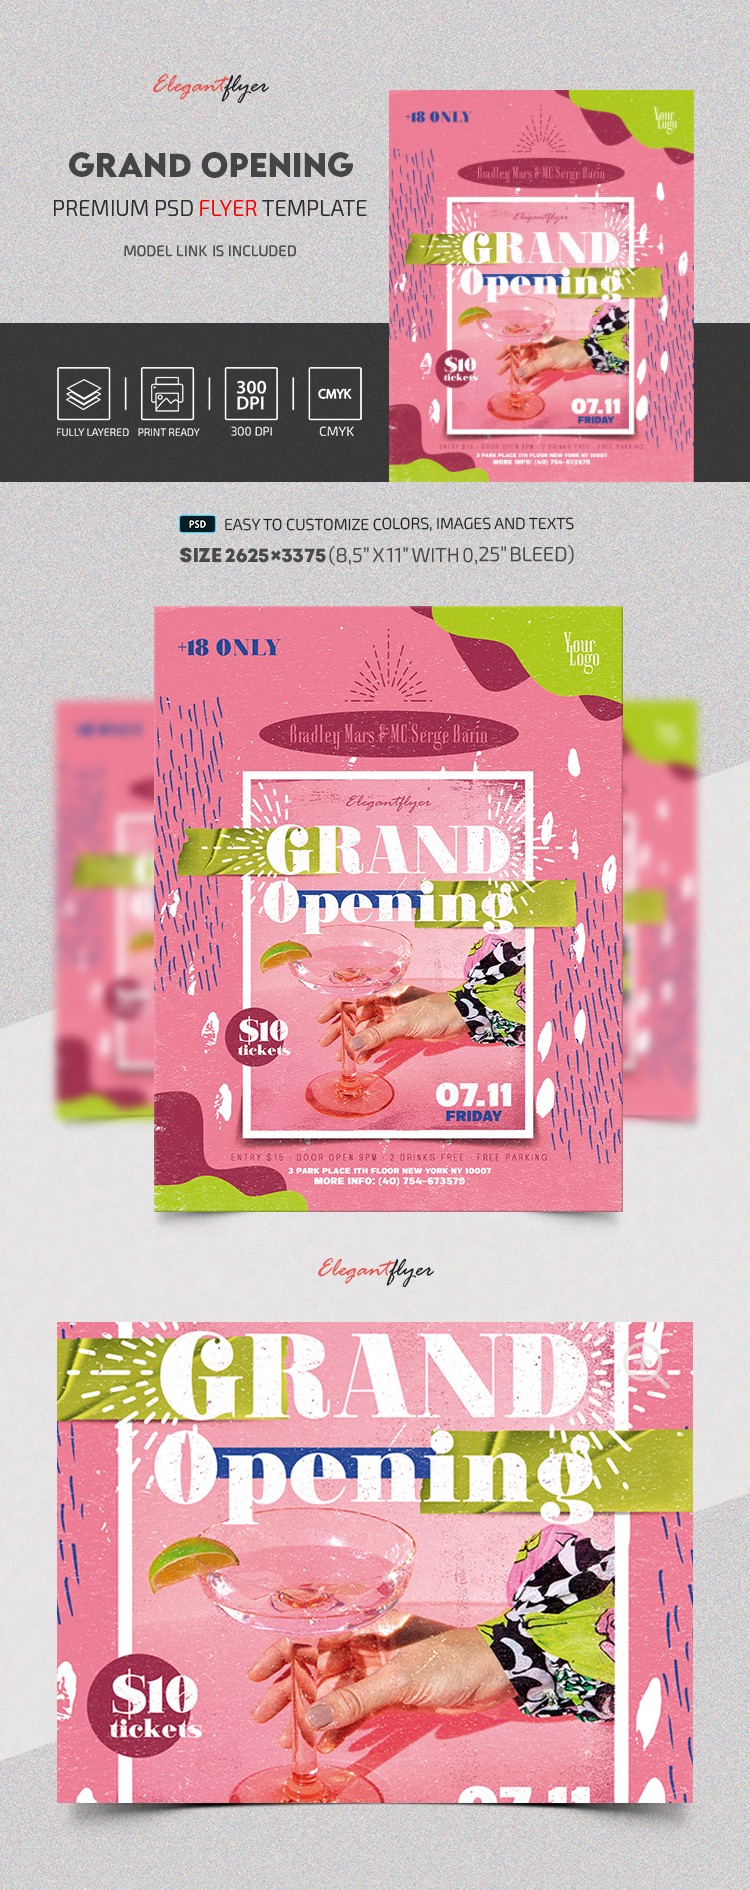 Grand Opening Flyer by ElegantFlyer